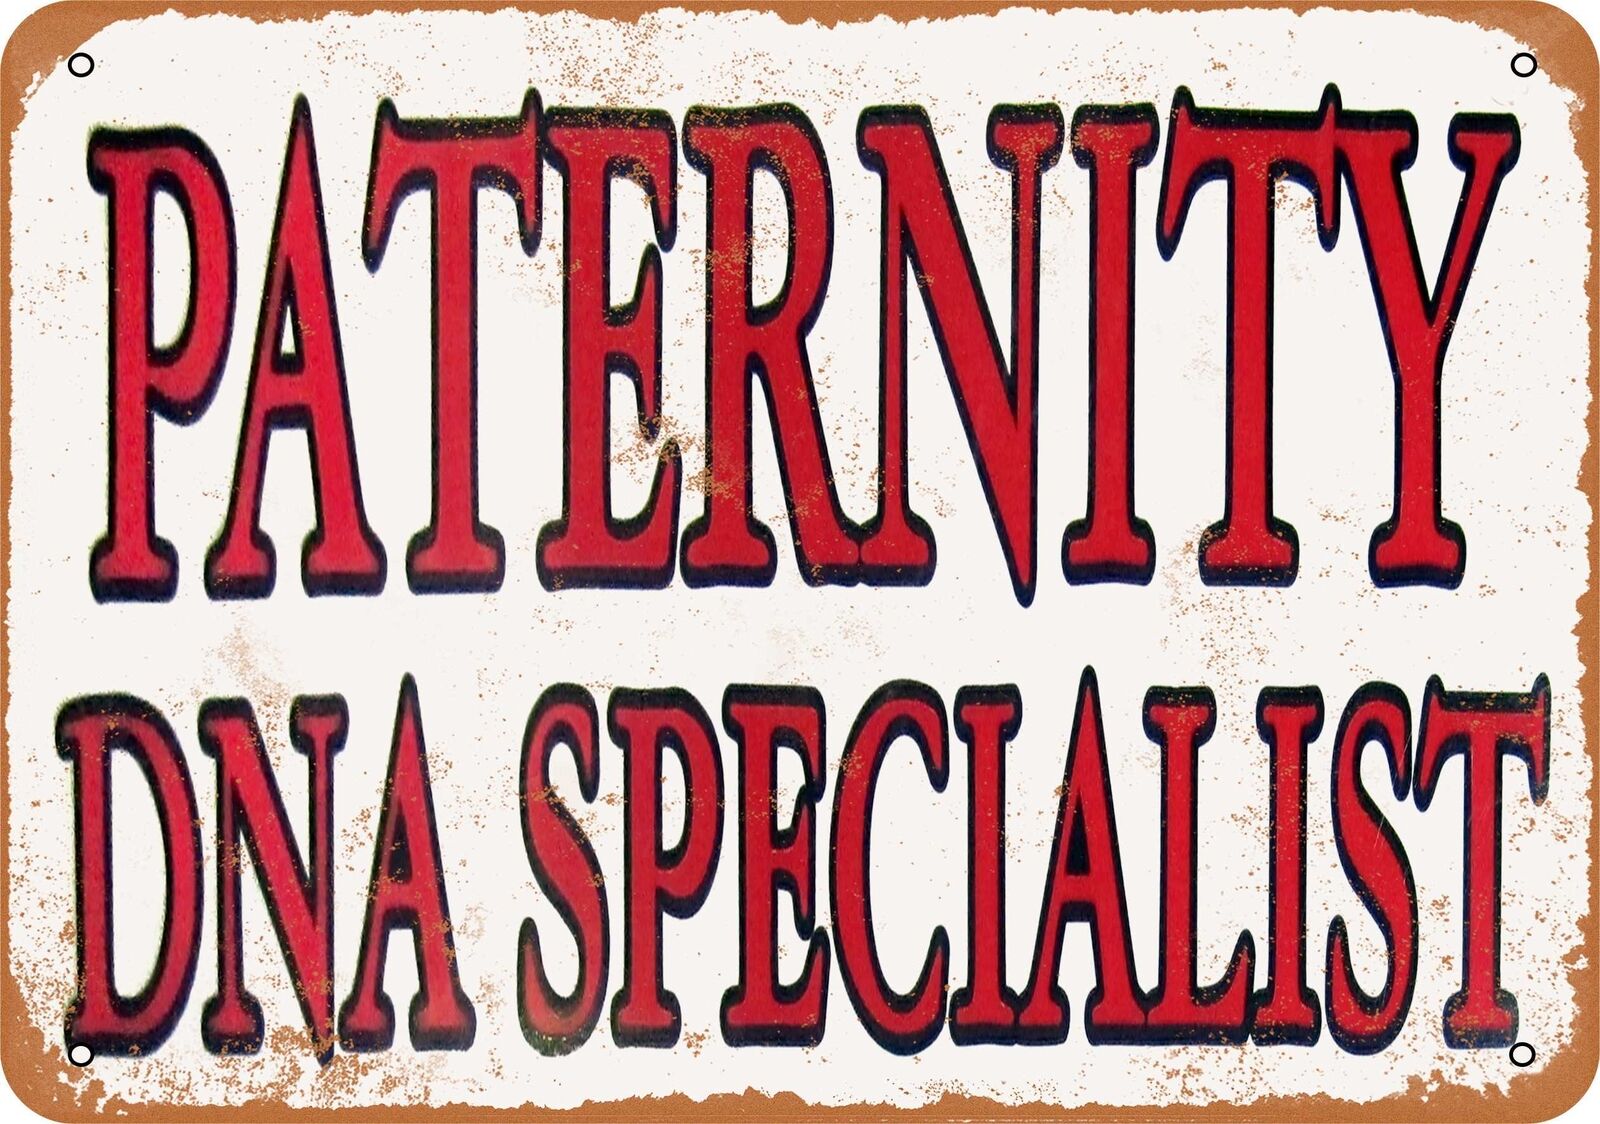 Metal Sign - Paternity DNA Specialist -- Vintage Look